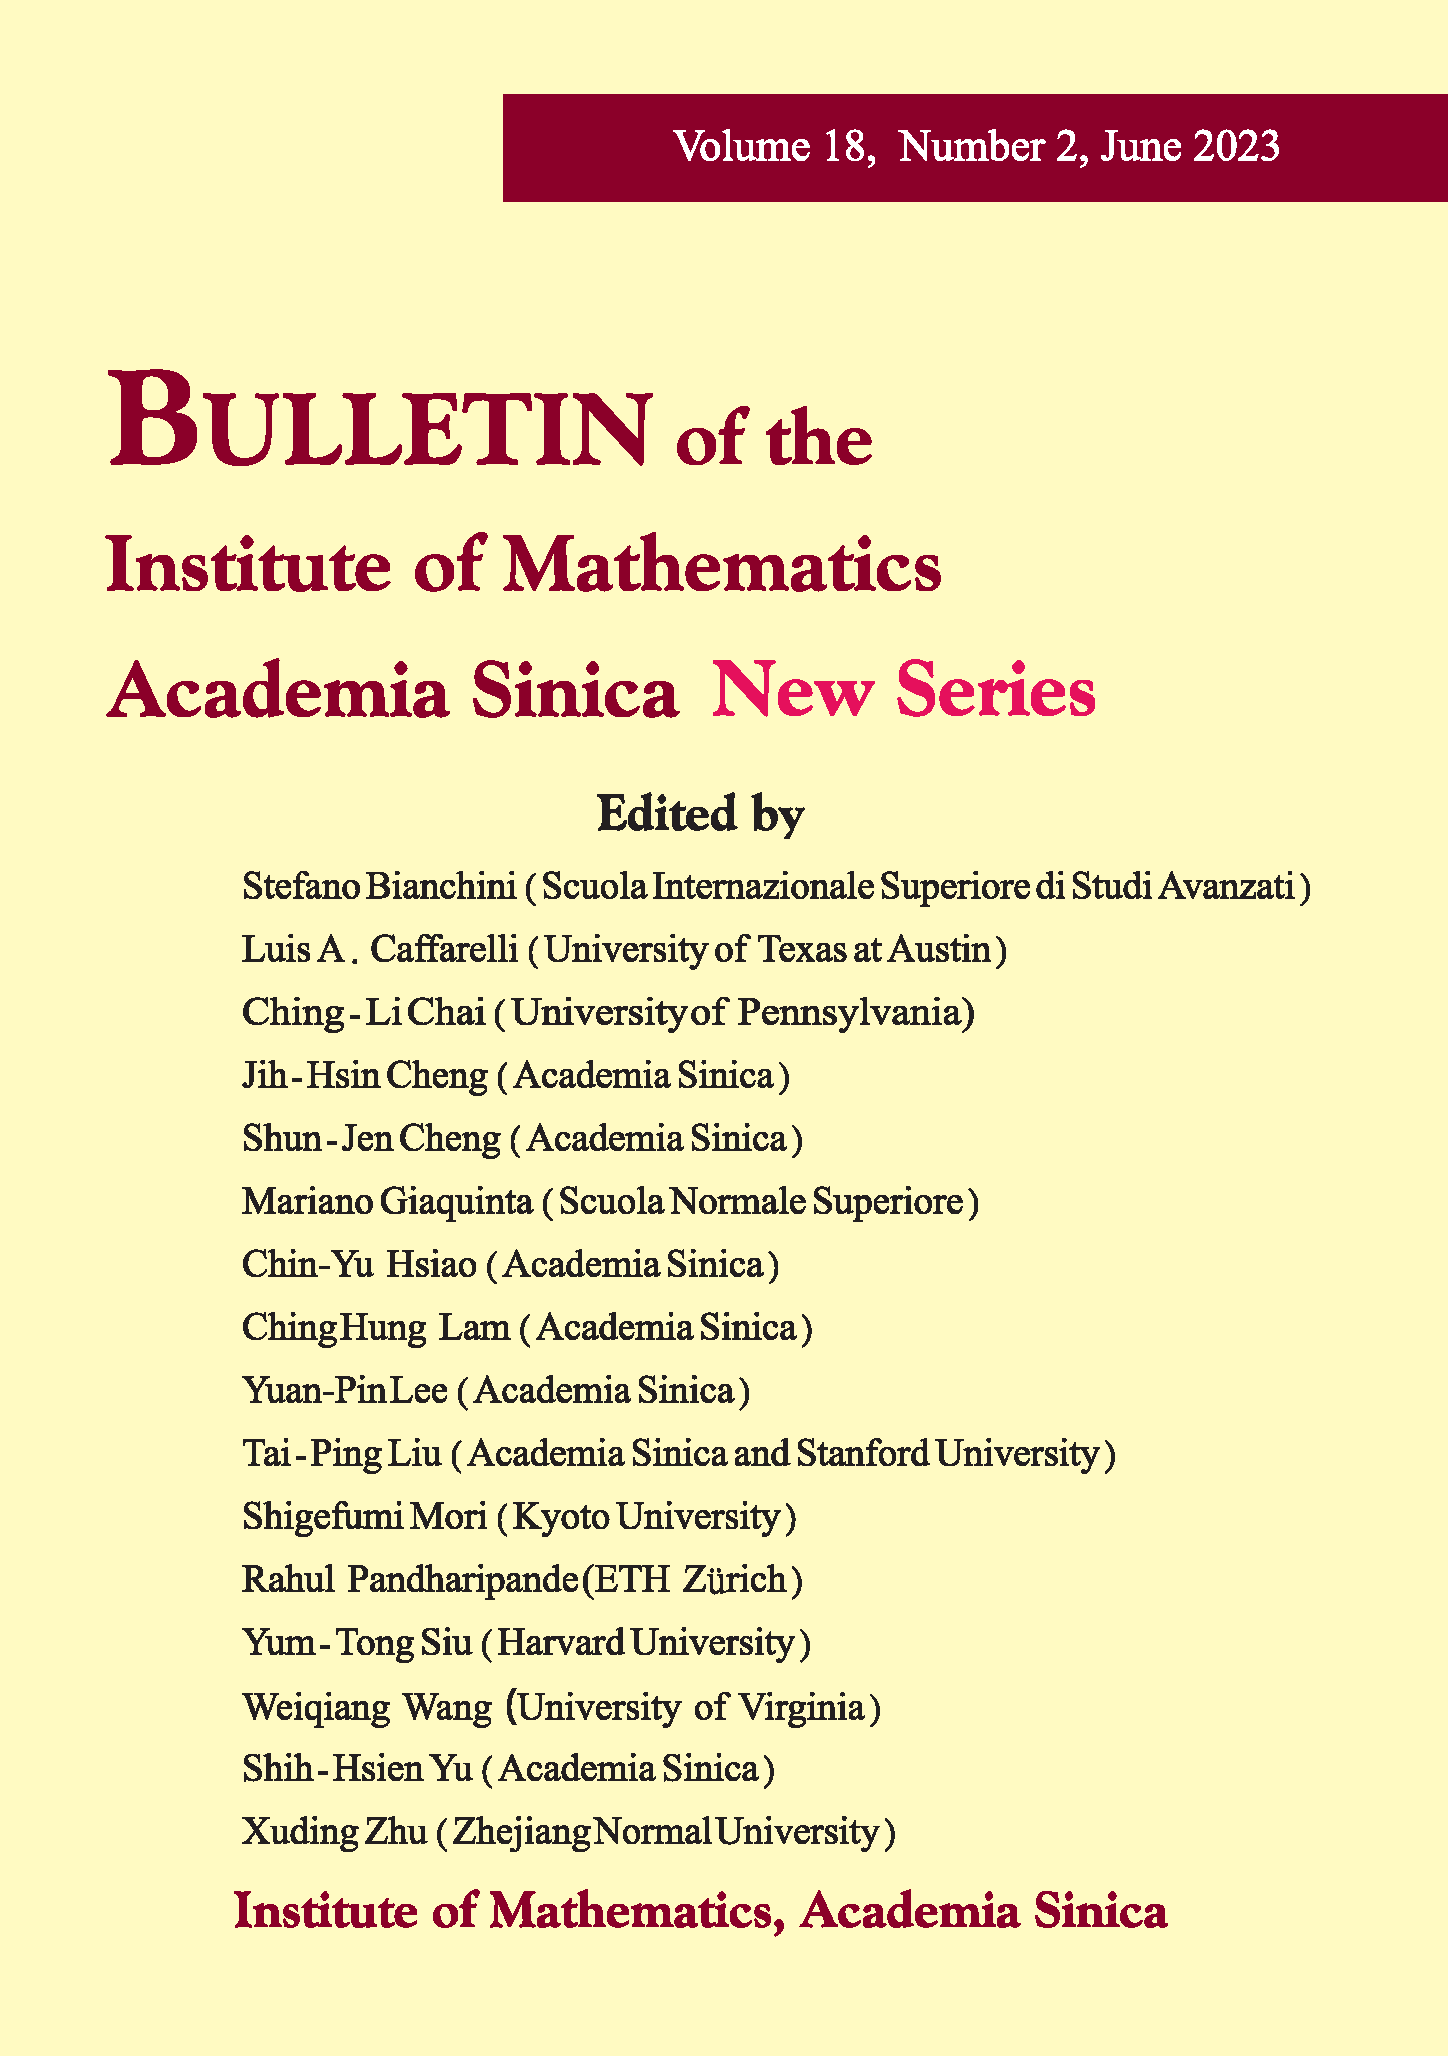 《Bulletin of the Institute of Mathematics Academia Sinica New Series》 Volume 18 Number 2